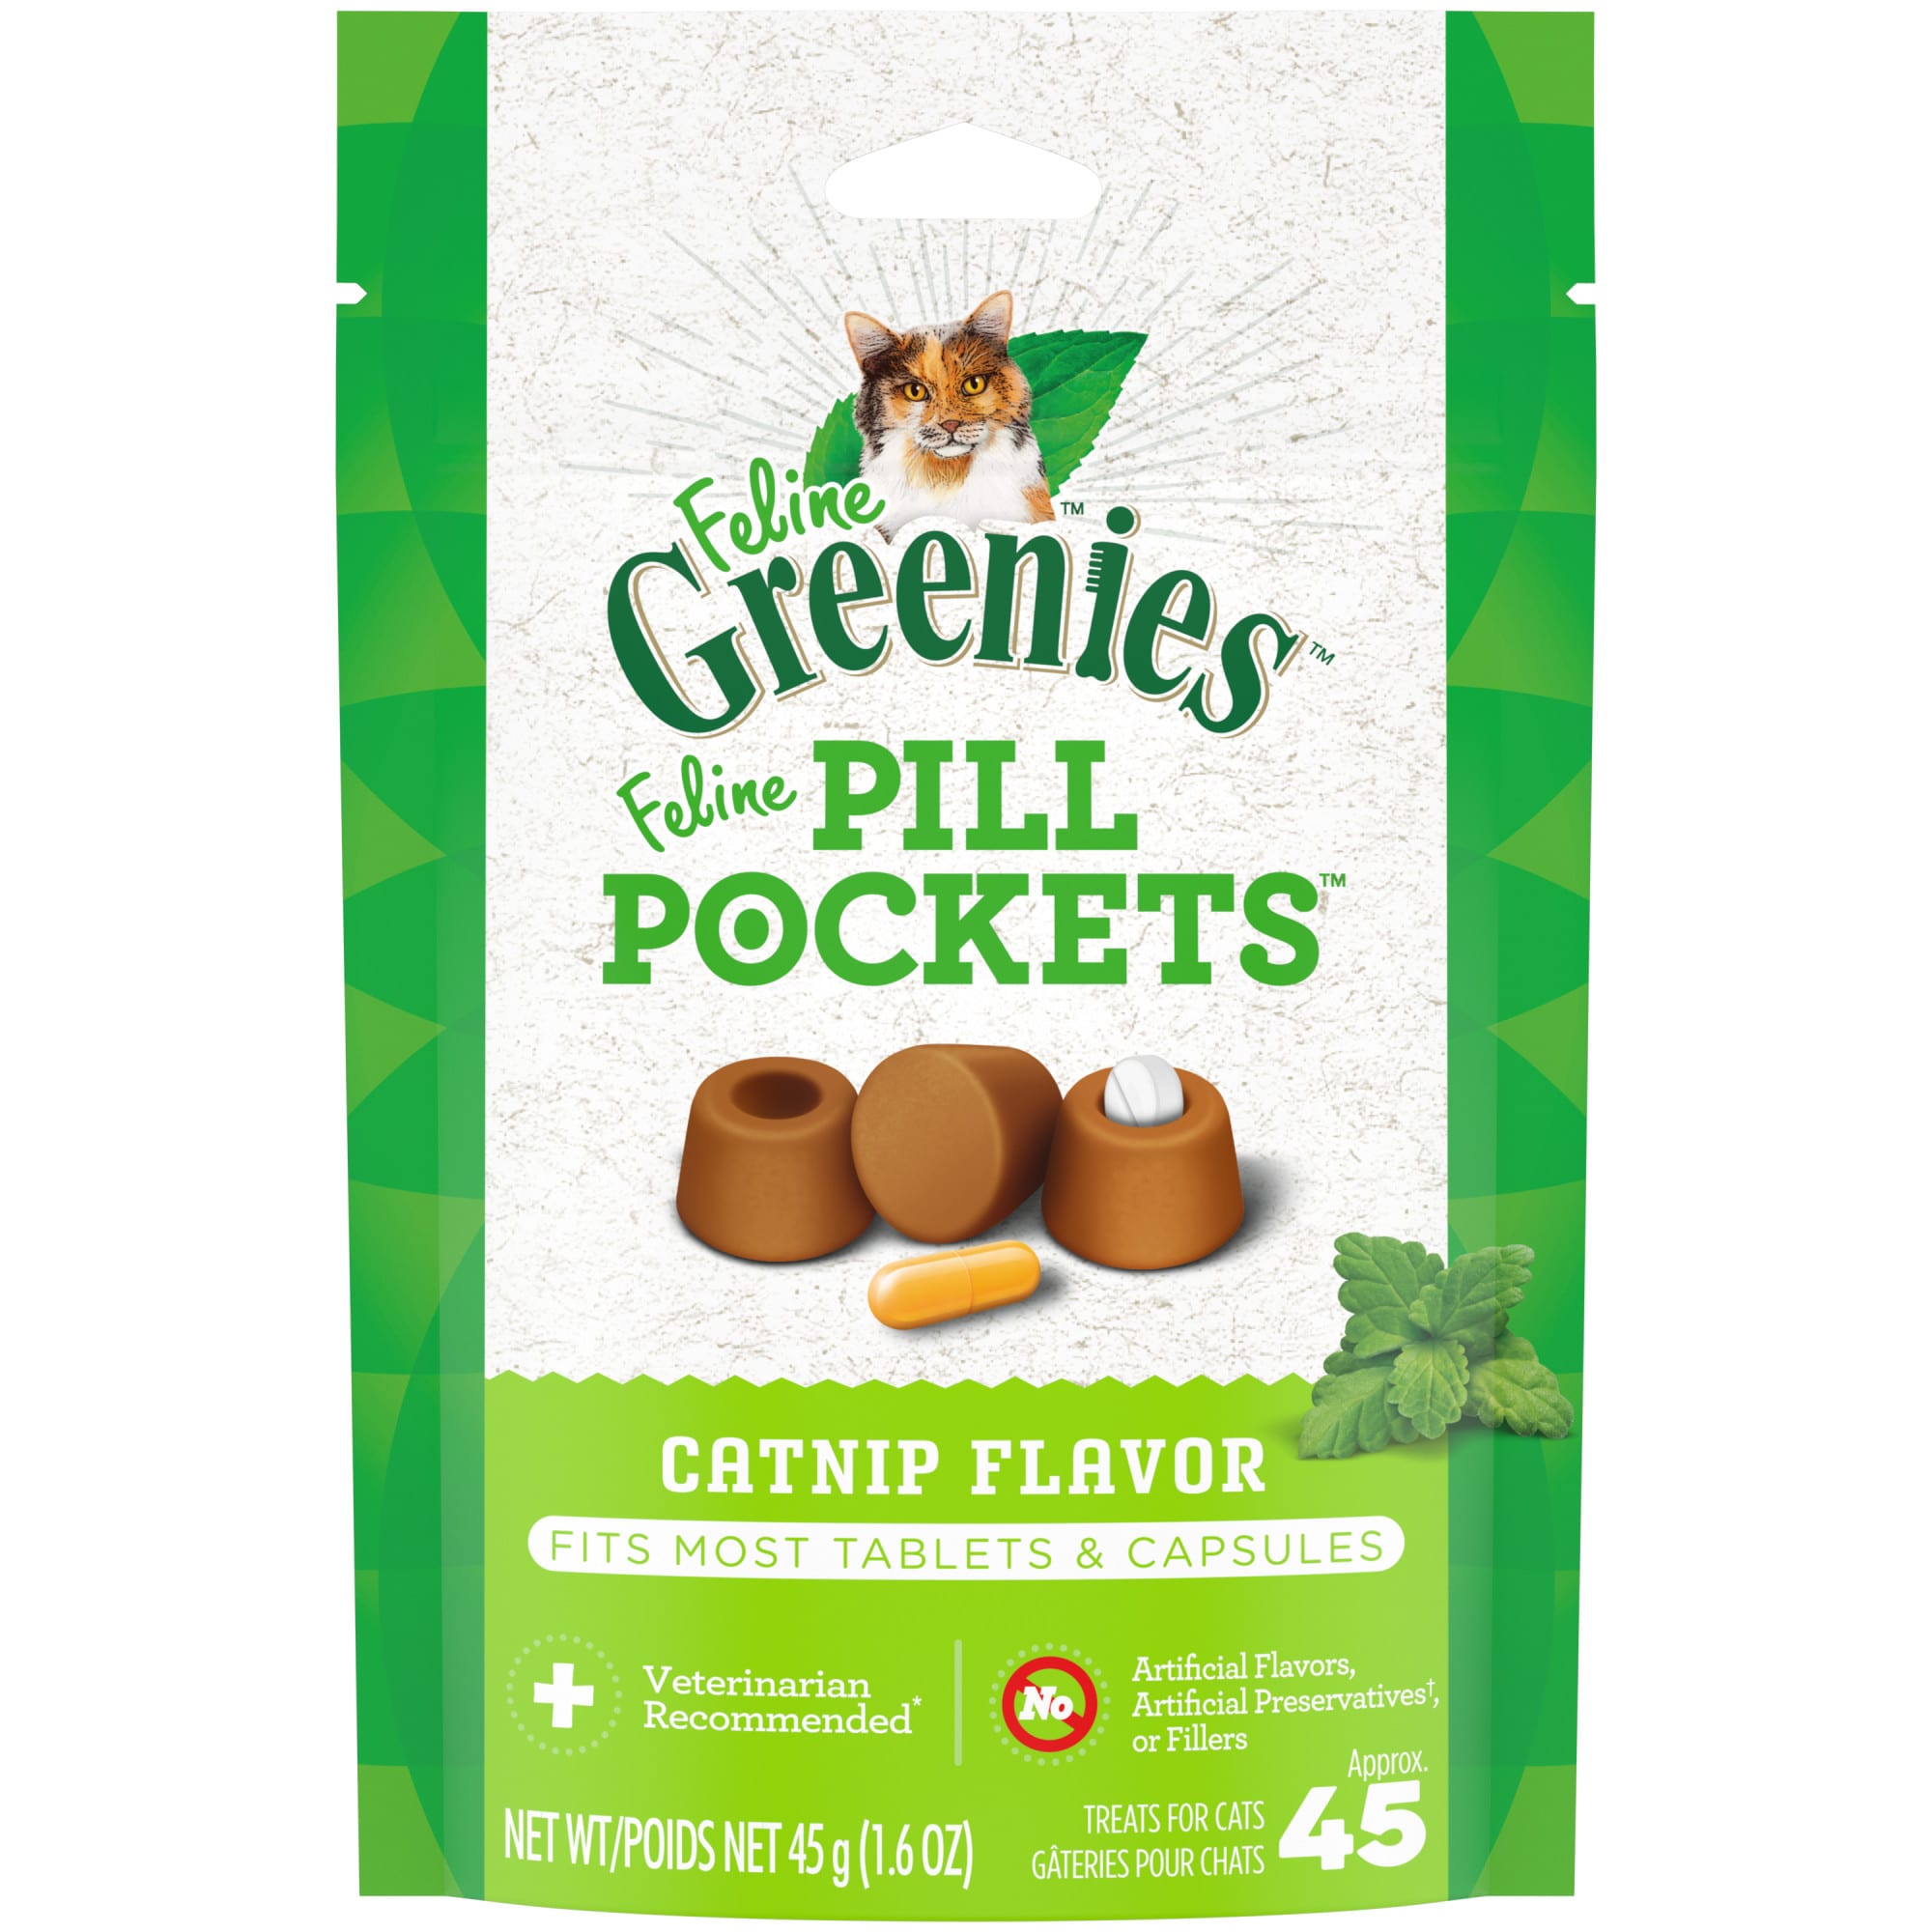 Photos - Cat Food Greenies Pill Pockets Catnip Flavor Natural Soft Cat Treats, 1.6 